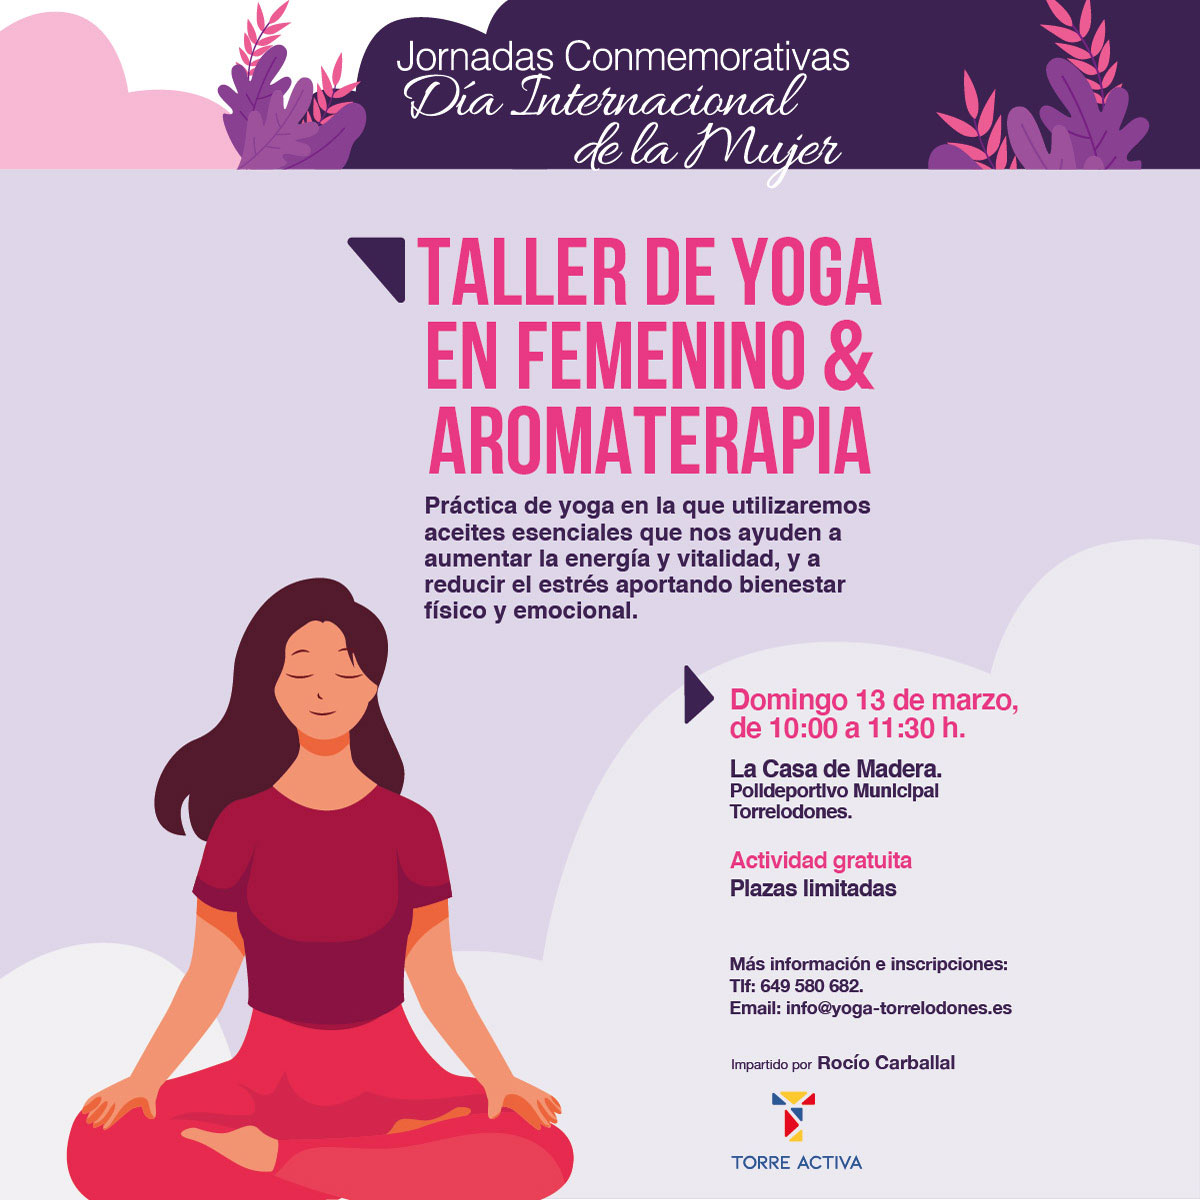 Taller de Yoga en femenino & Aromaterapia